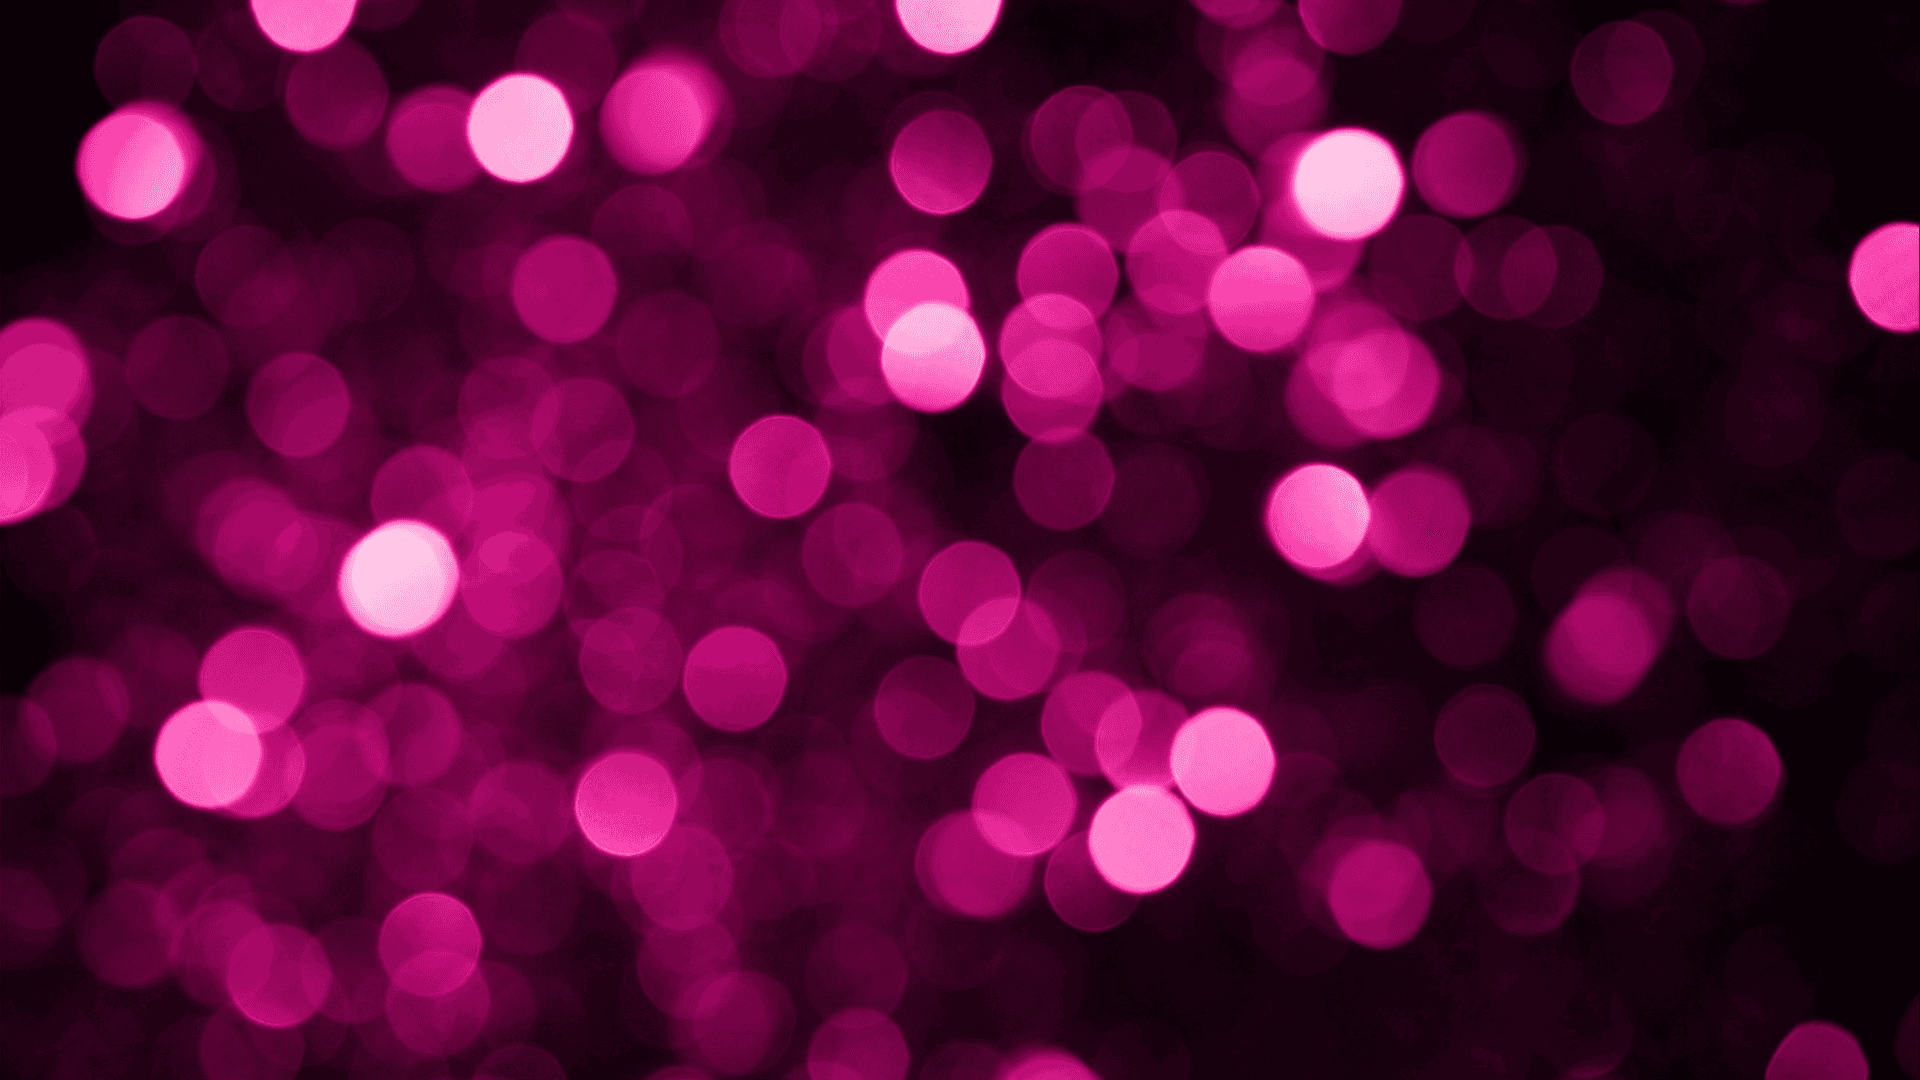 100+] Pink Sparkle Backgrounds